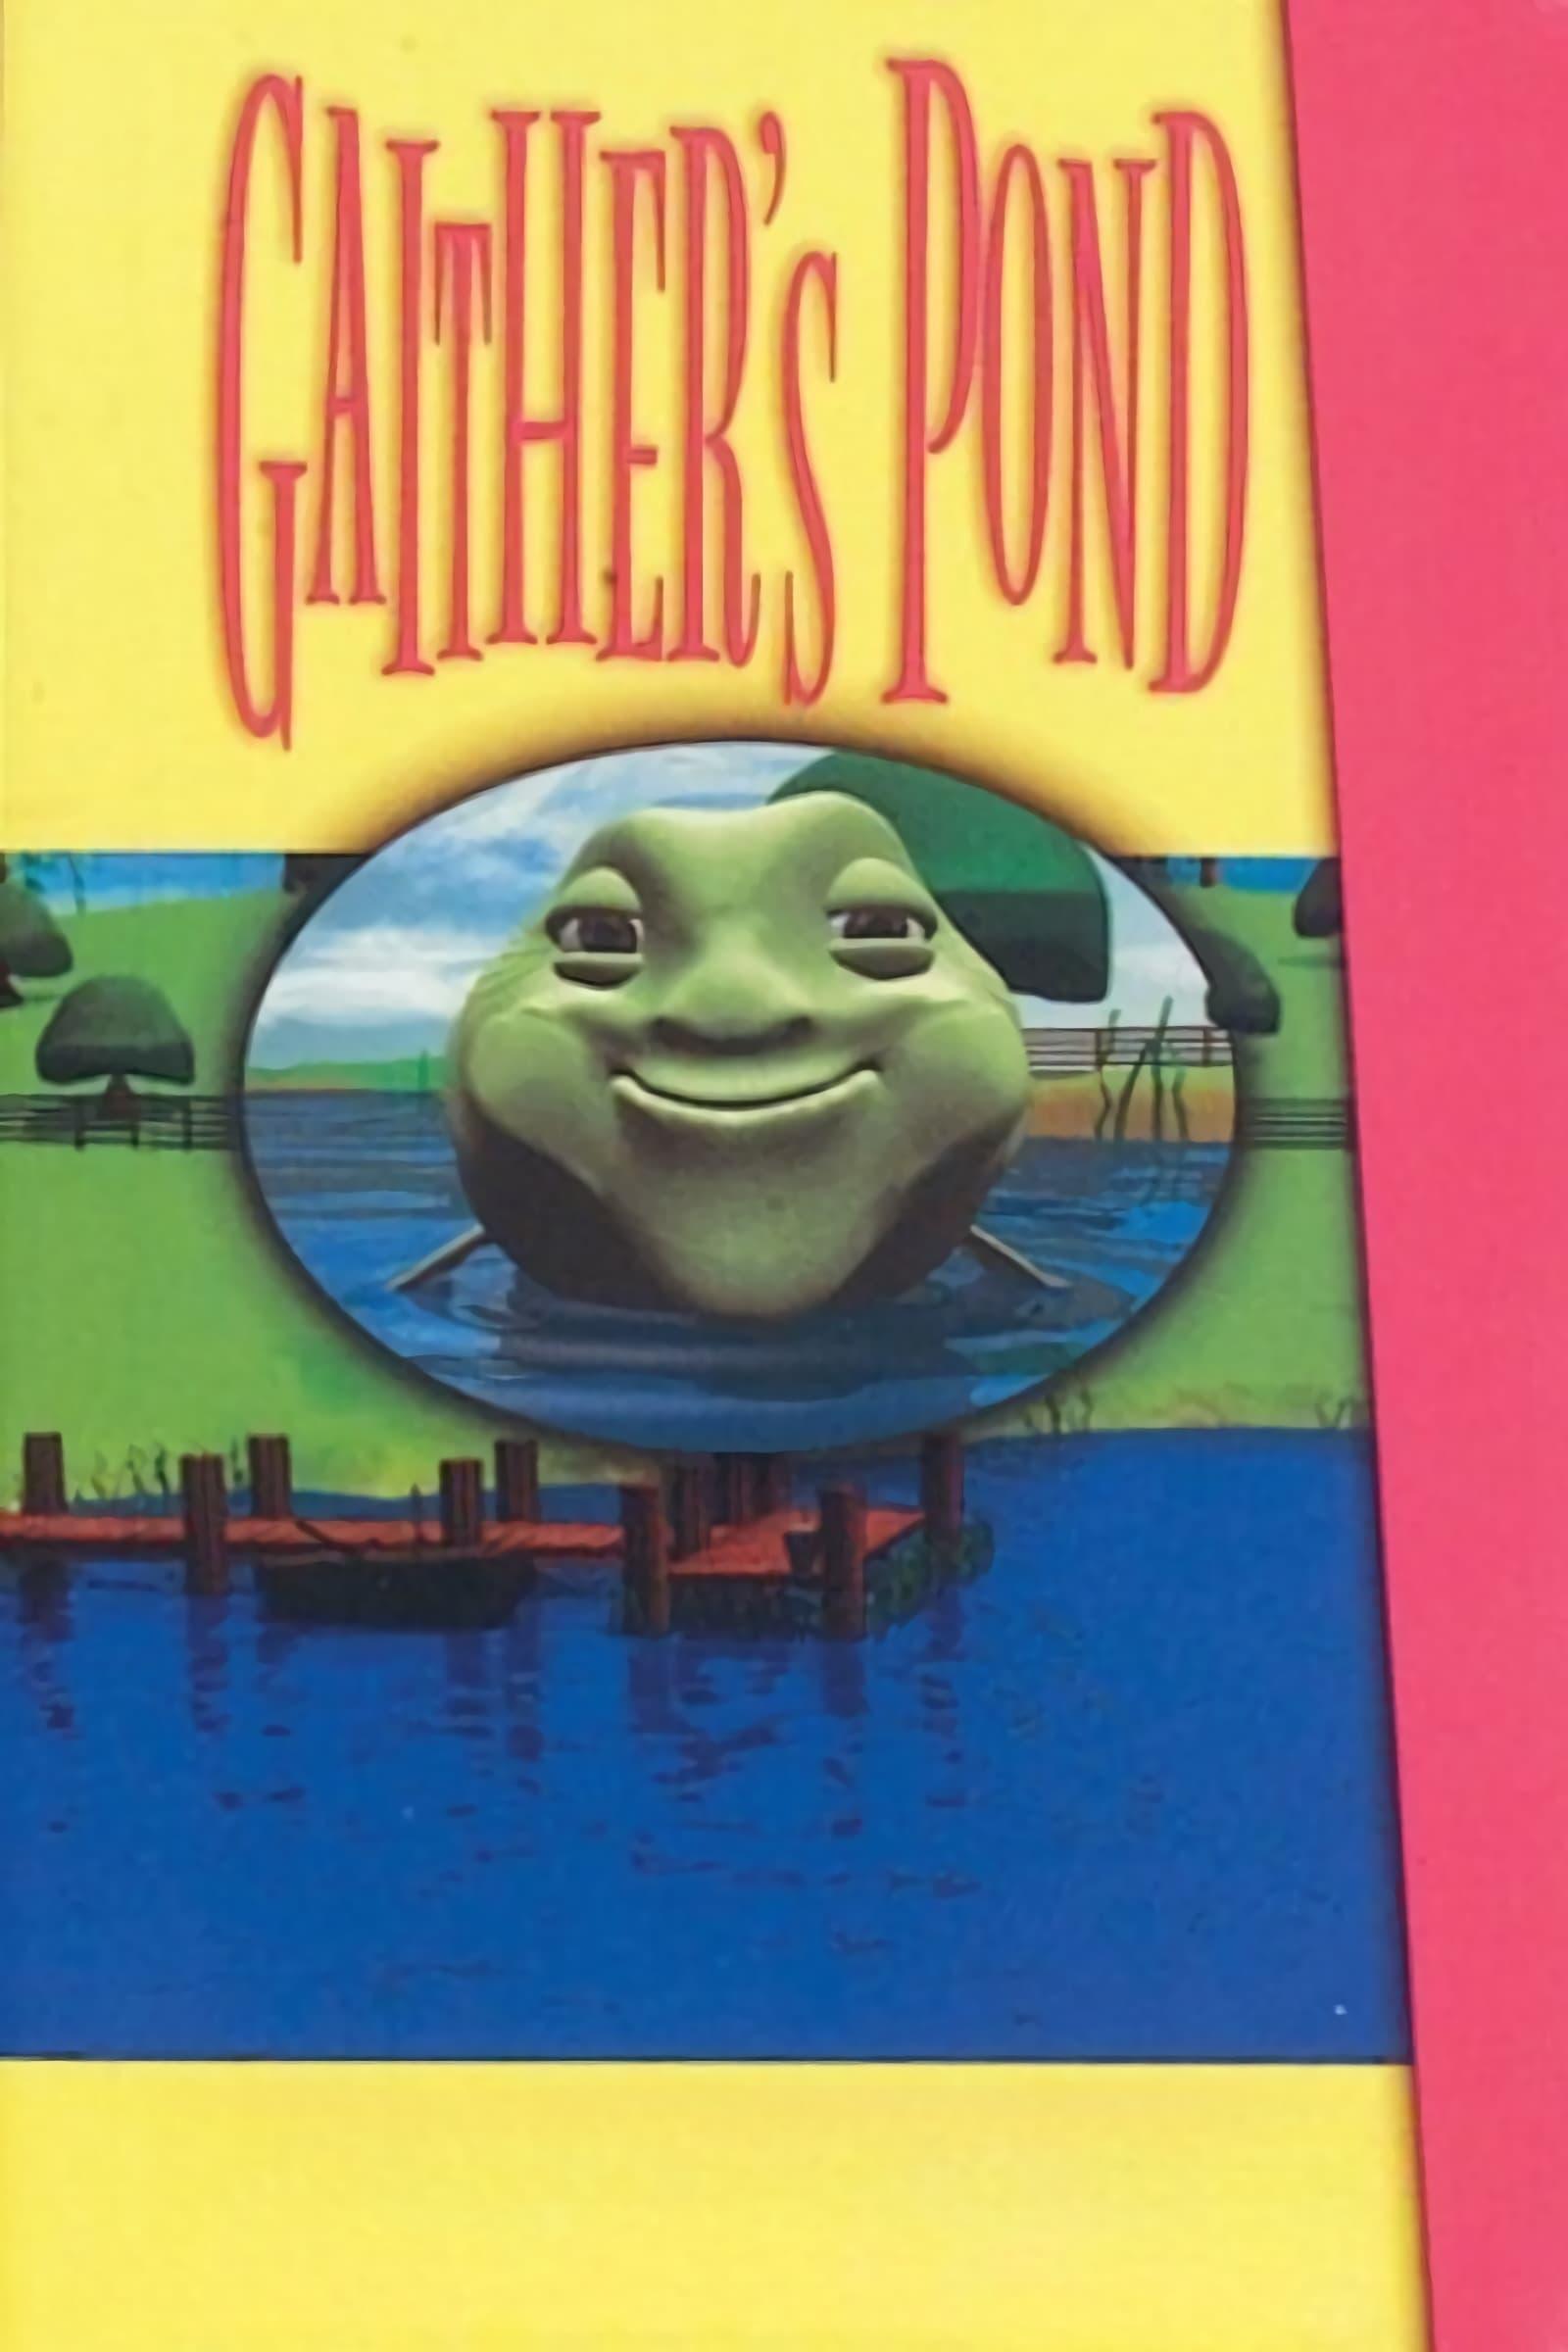 Gaither's Pond: Fishtales poster